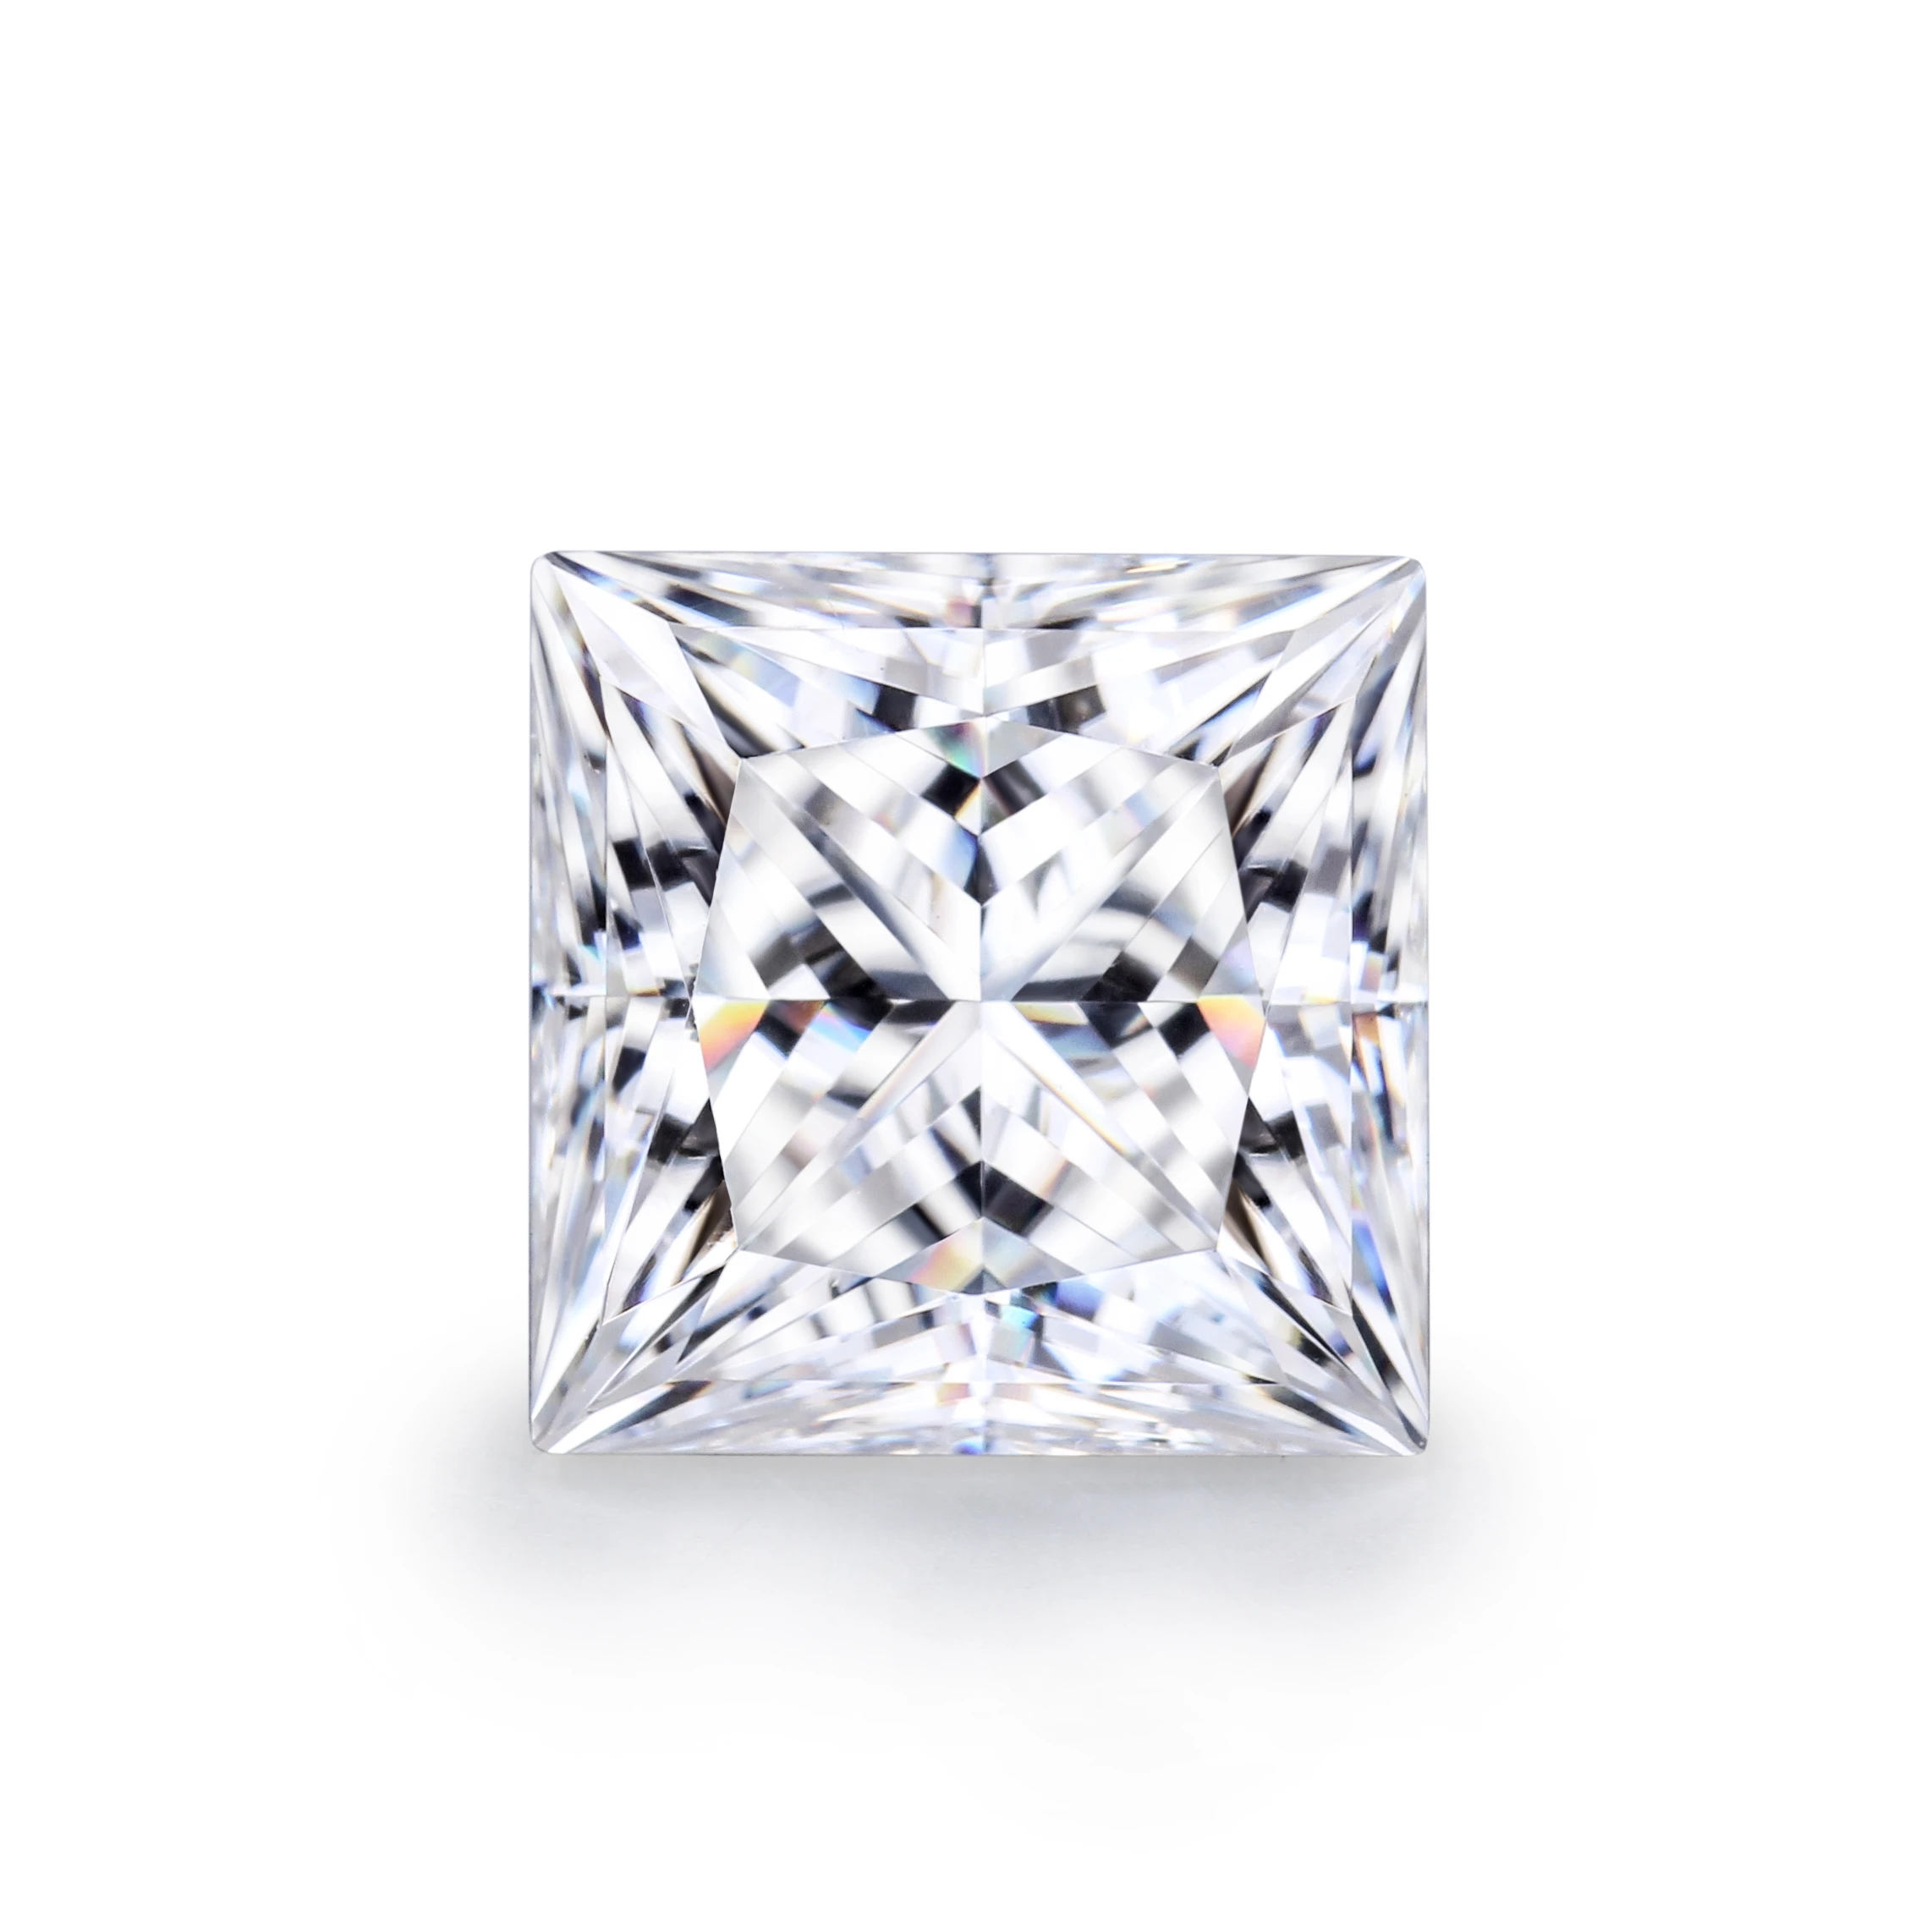 

Starsgem princess cut moissanite loose gemstones DEF color synthetic moissanite gemstone